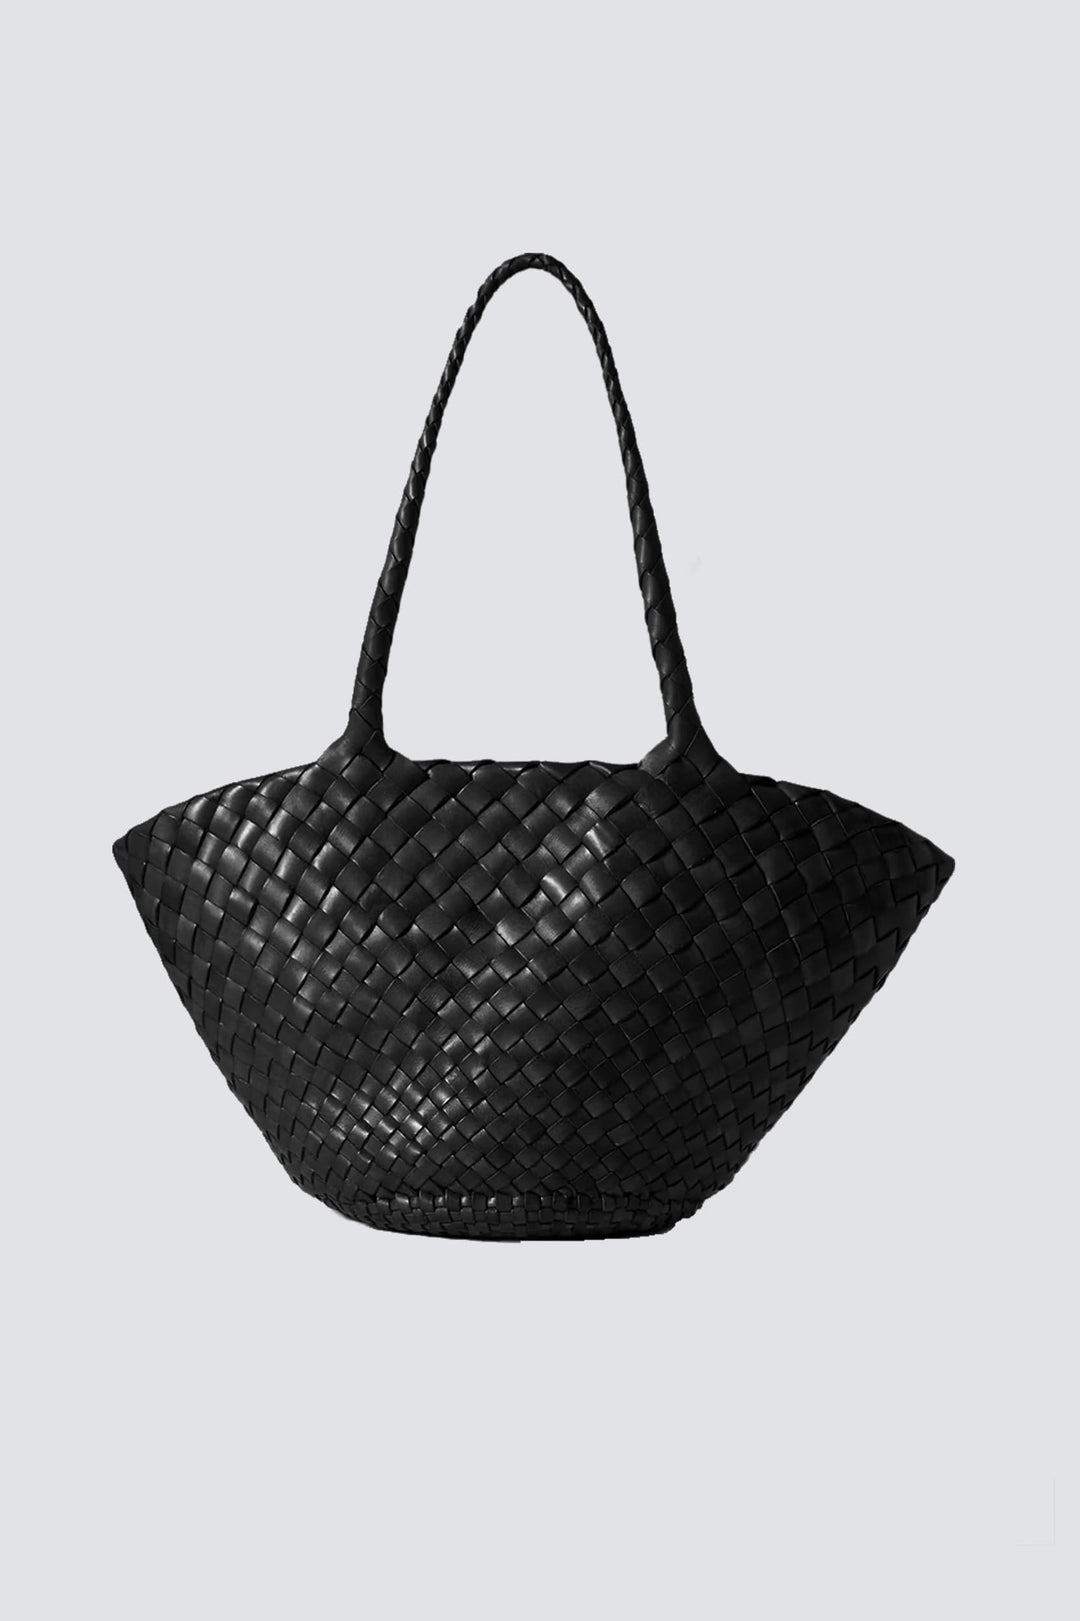 Dragon Diffusion woven leather bag handmade - Egola Black